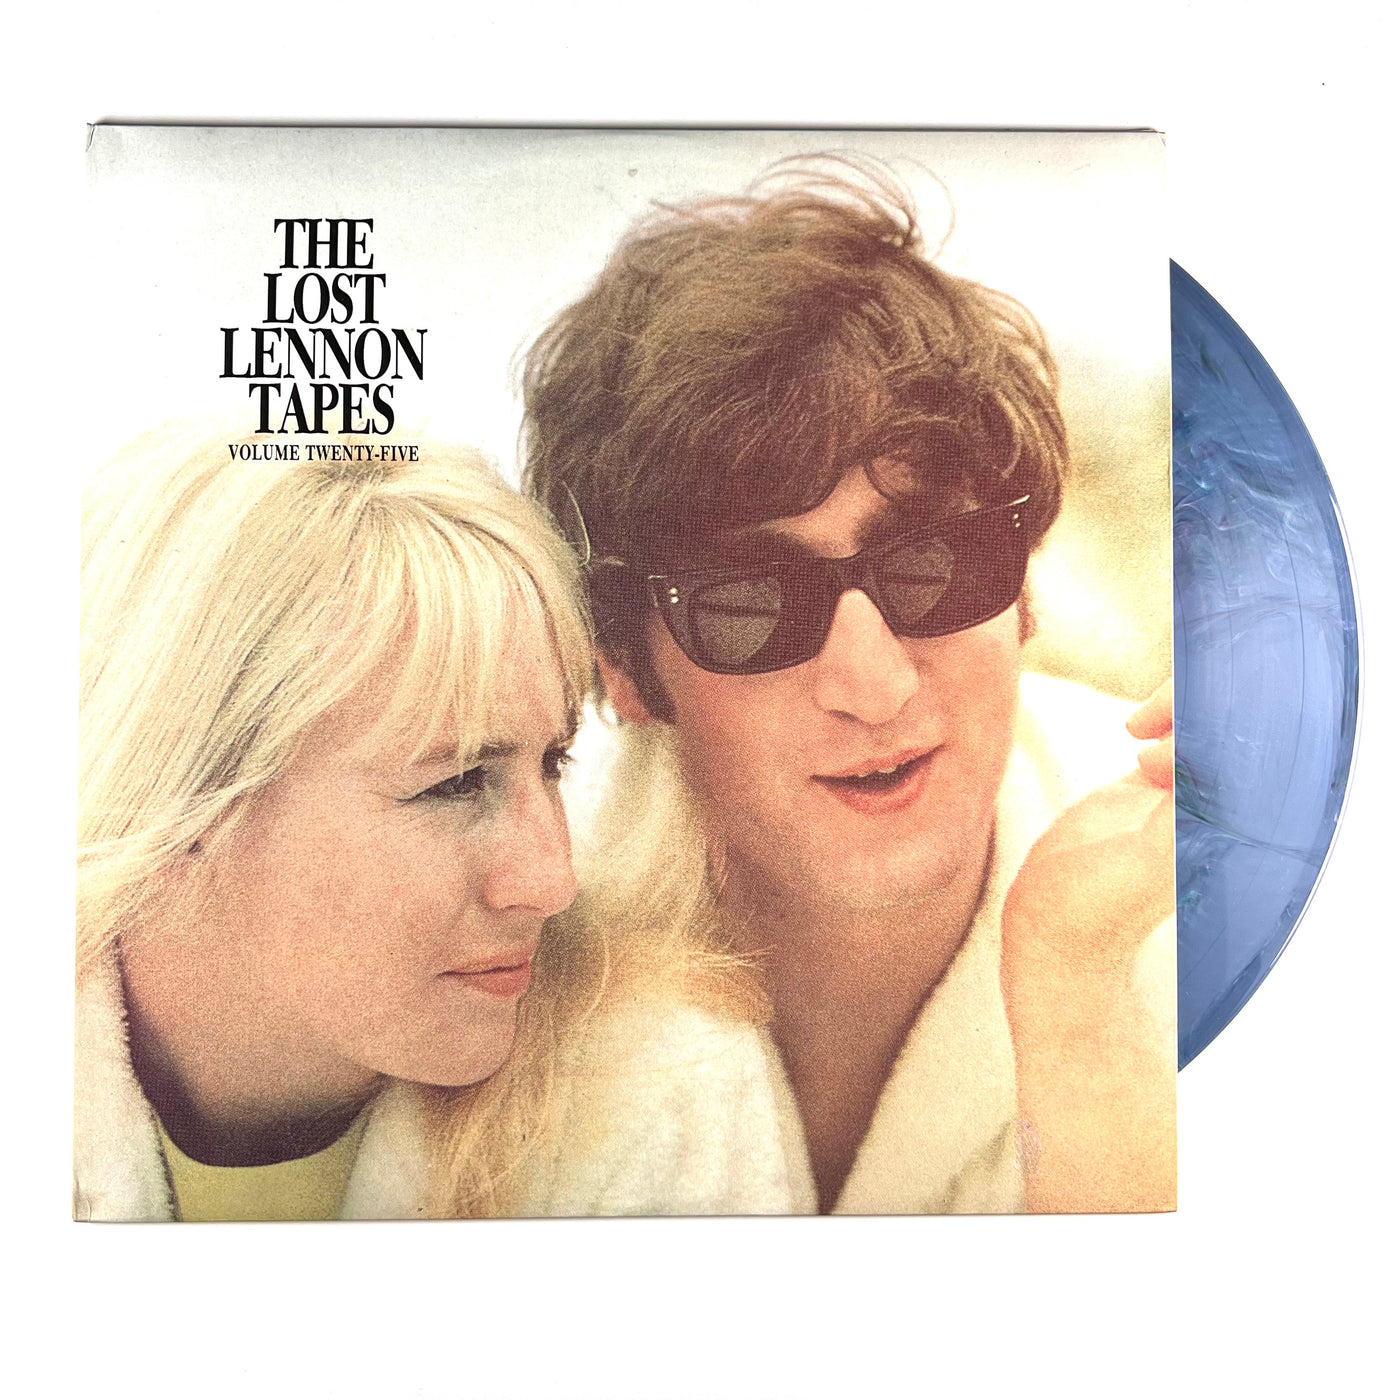 John Lennon - The Lost Lennon Tapes Volume Twenty-Five